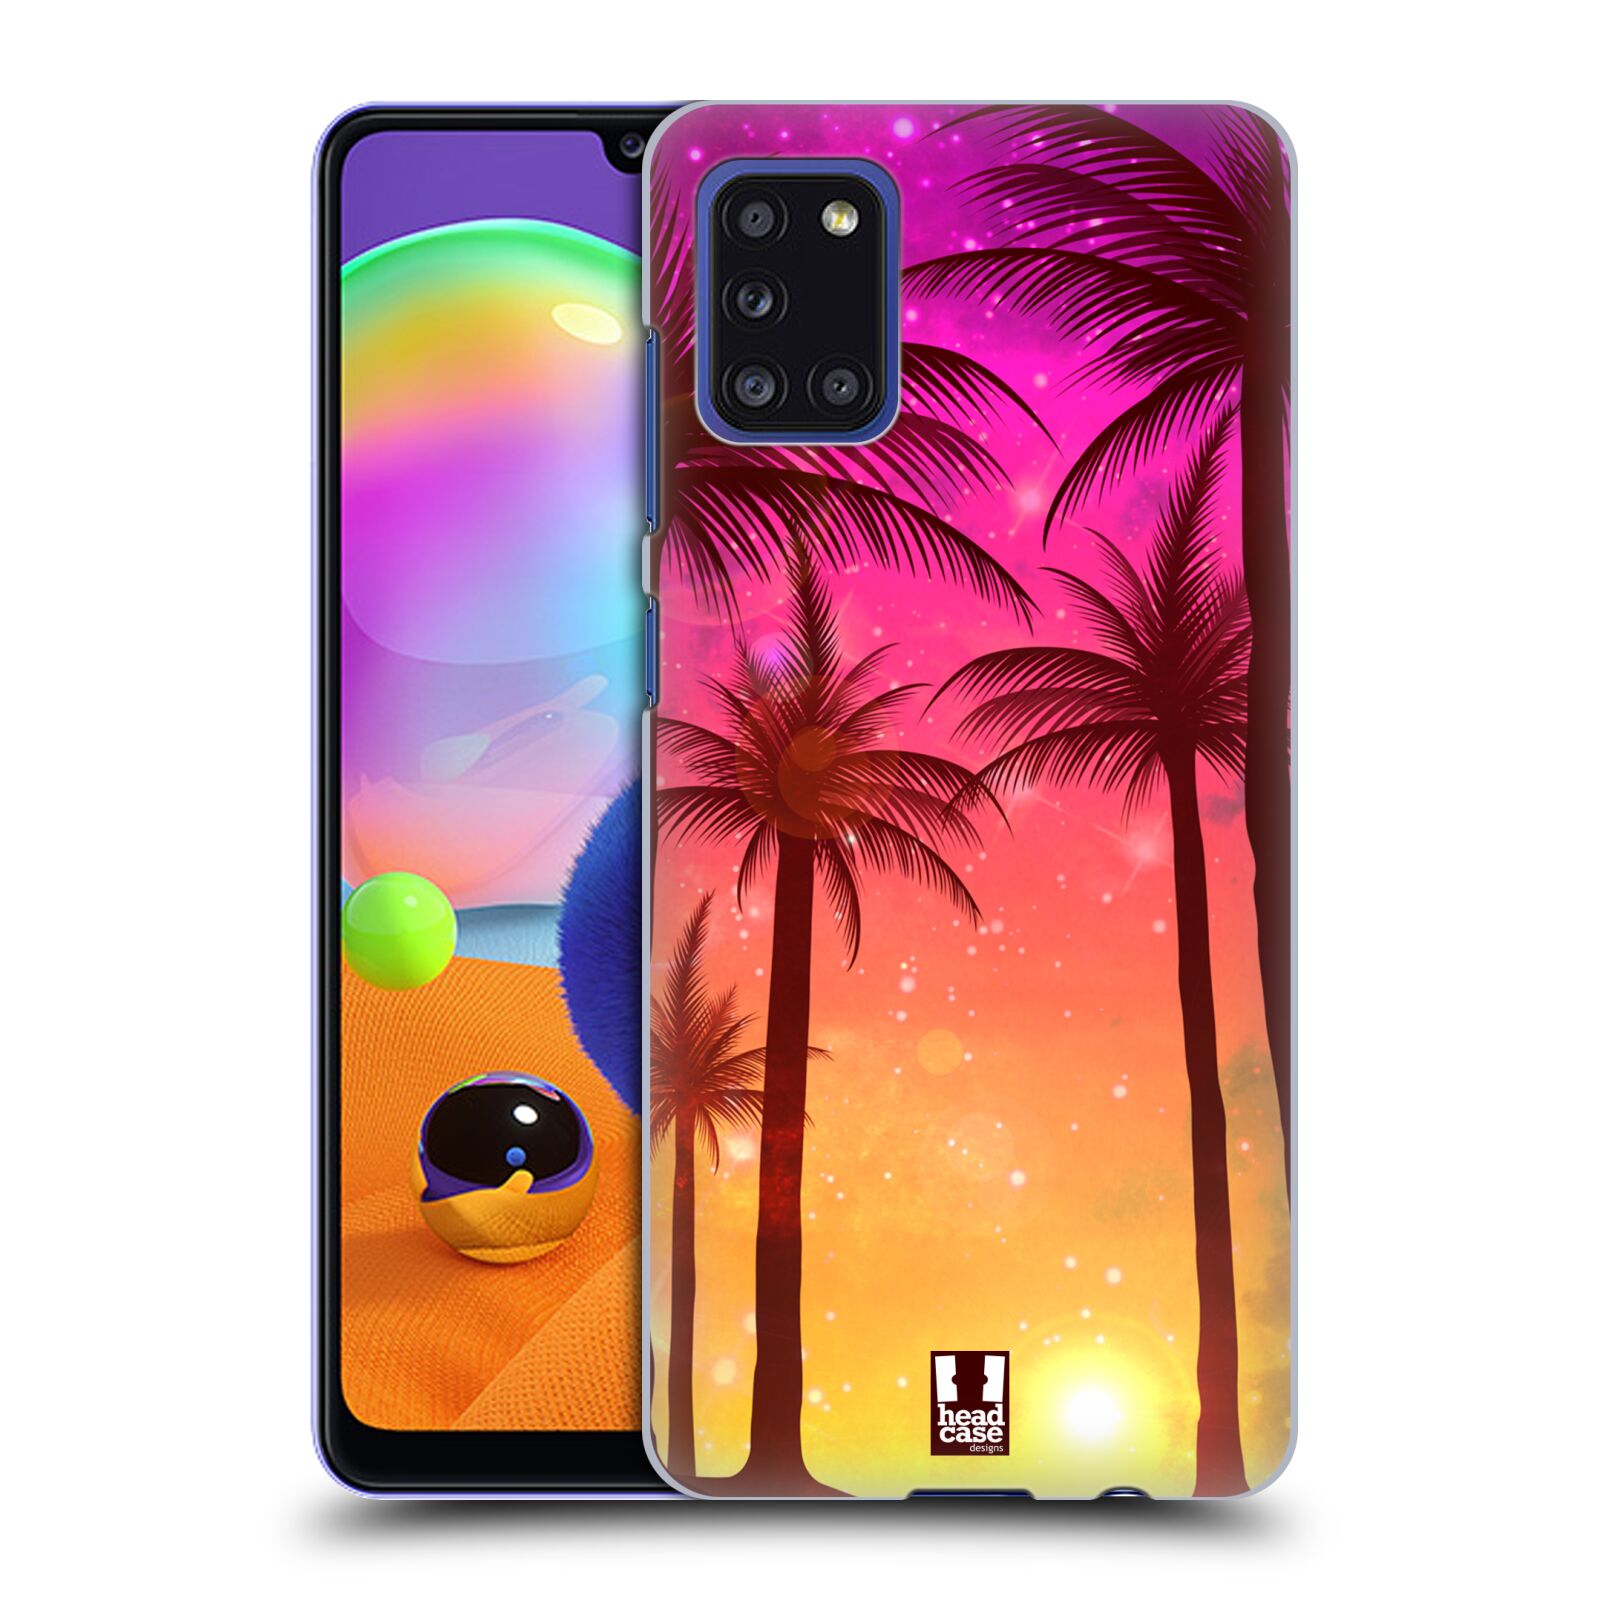 Zadní kryt na mobil Samsung Galaxy A31 vzor Kreslený motiv silueta moře a palmy RŮŽOVÁ